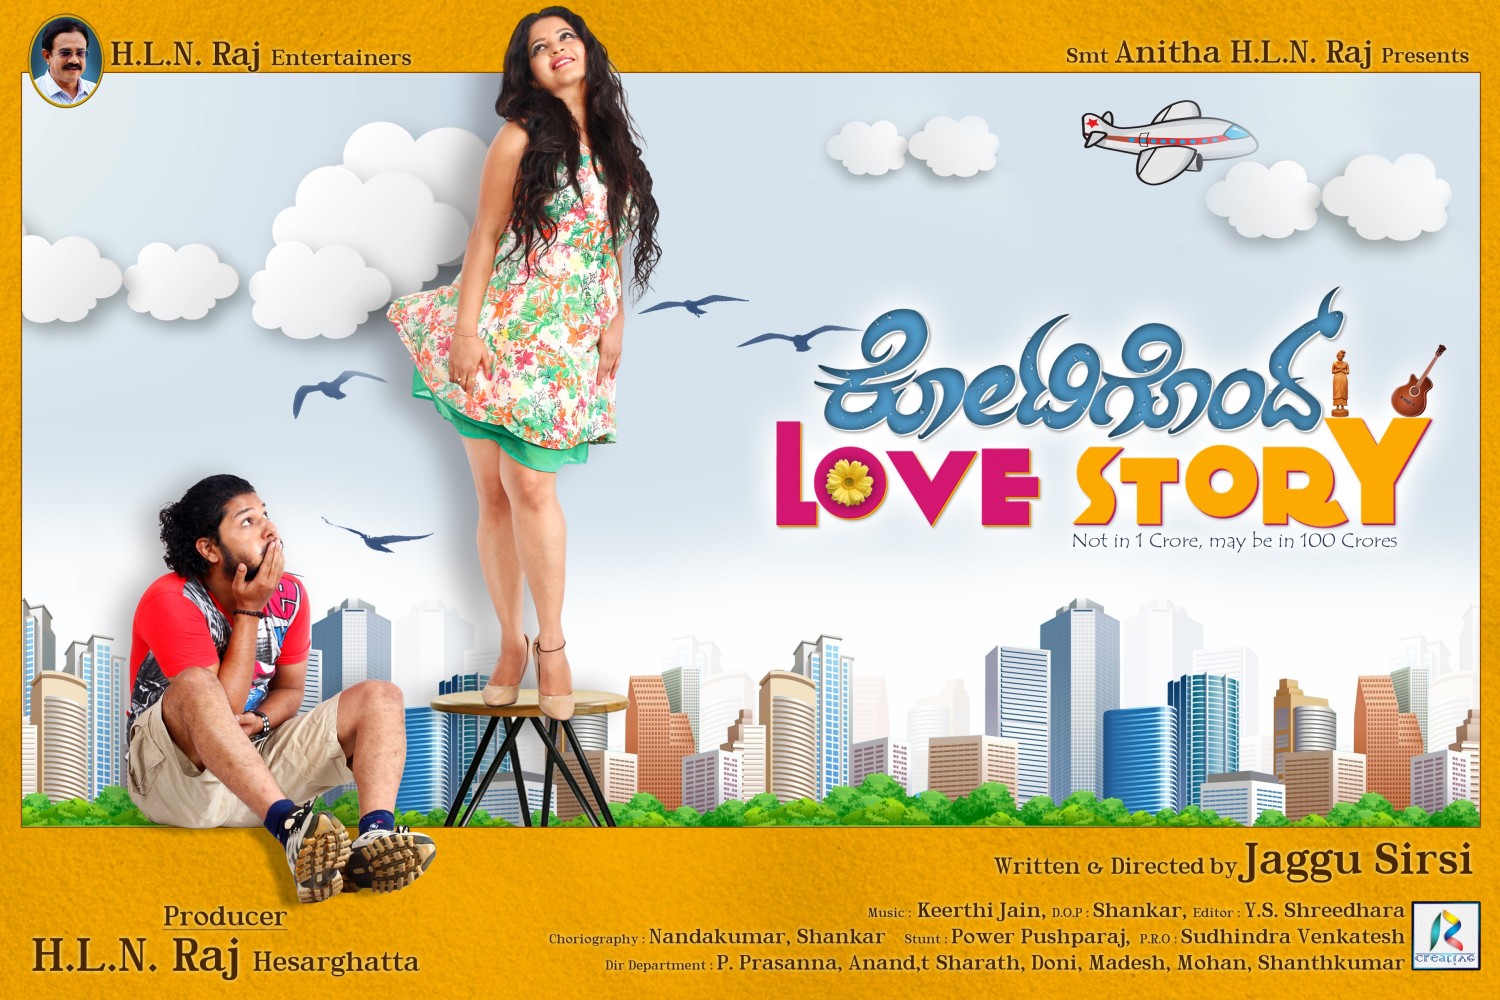 Extra Large Movie Poster Image for Kotigondu Love Story (#2 of 3)